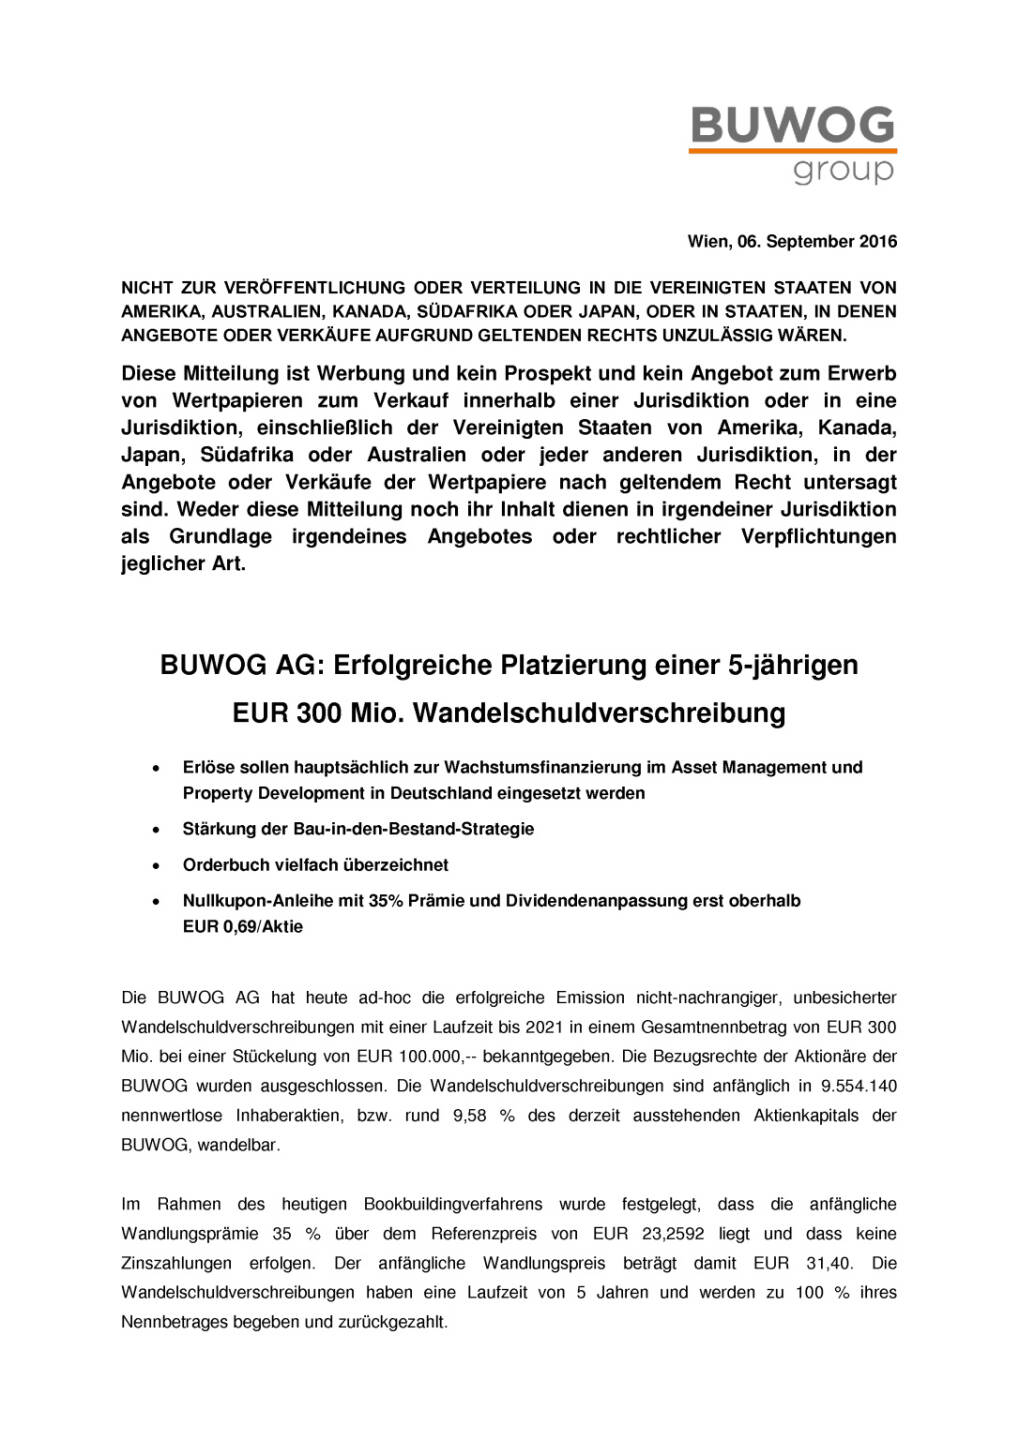 Buwog: Aufnahme in ATX five, Seite 1/5, komplettes Dokument unter http://boerse-social.com/static/uploads/file_1745_buwog_aufnahme_in_atx_five.pdf